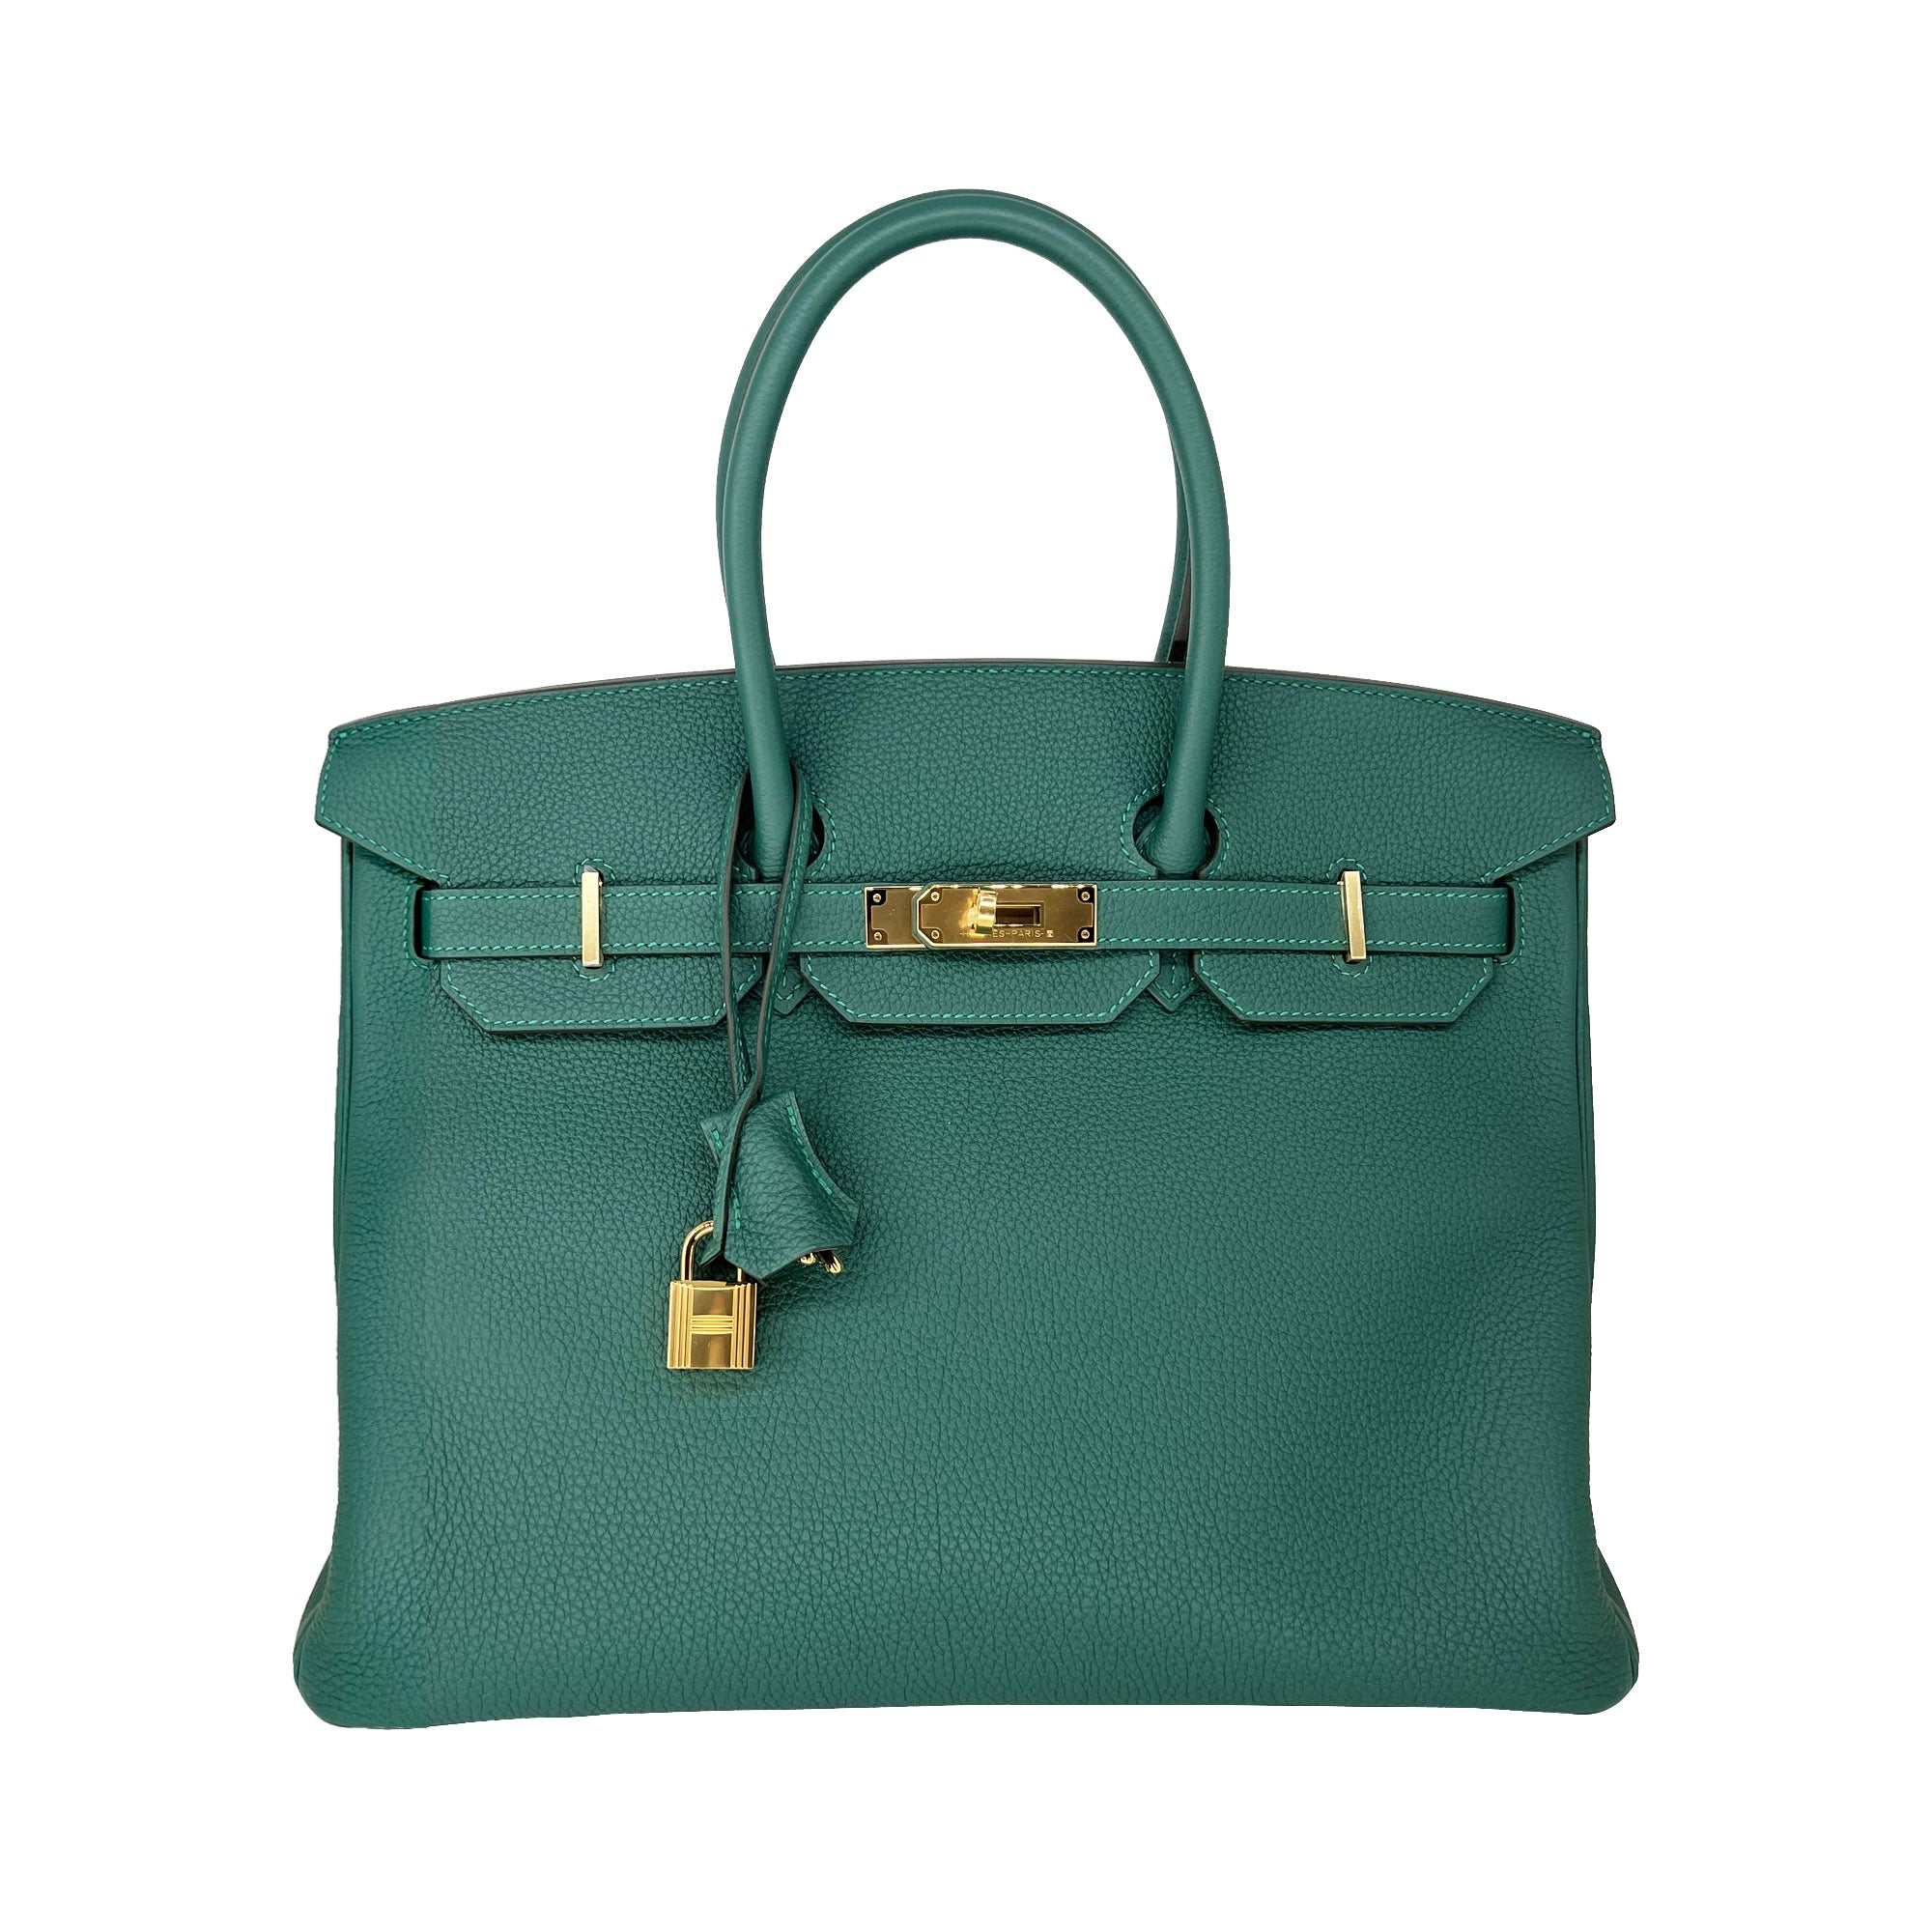 Hermès 2013 Pre-owned Birkin 30 Handbag - Brown